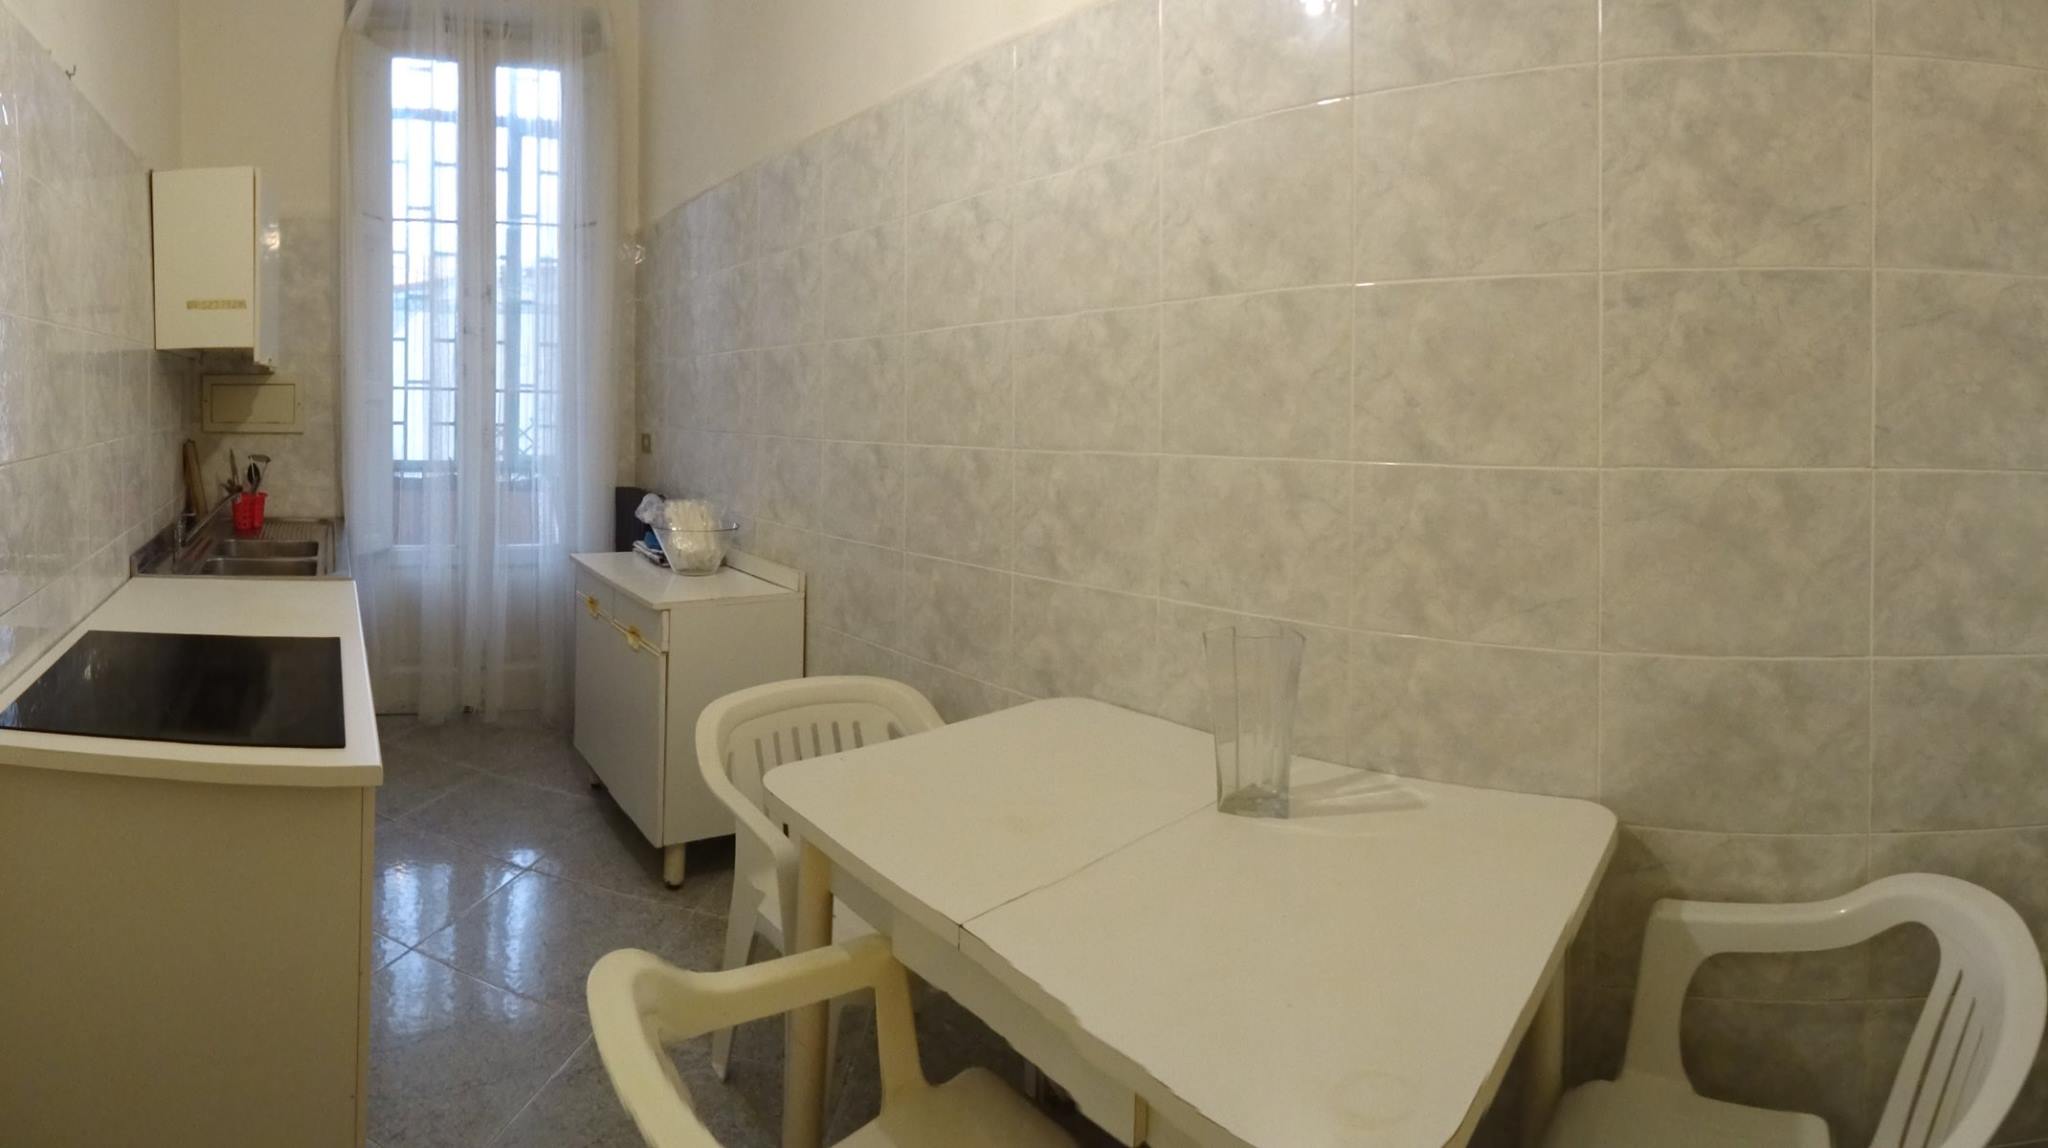 2 bedrooms- Corso Mazzini 21 (ground floor)